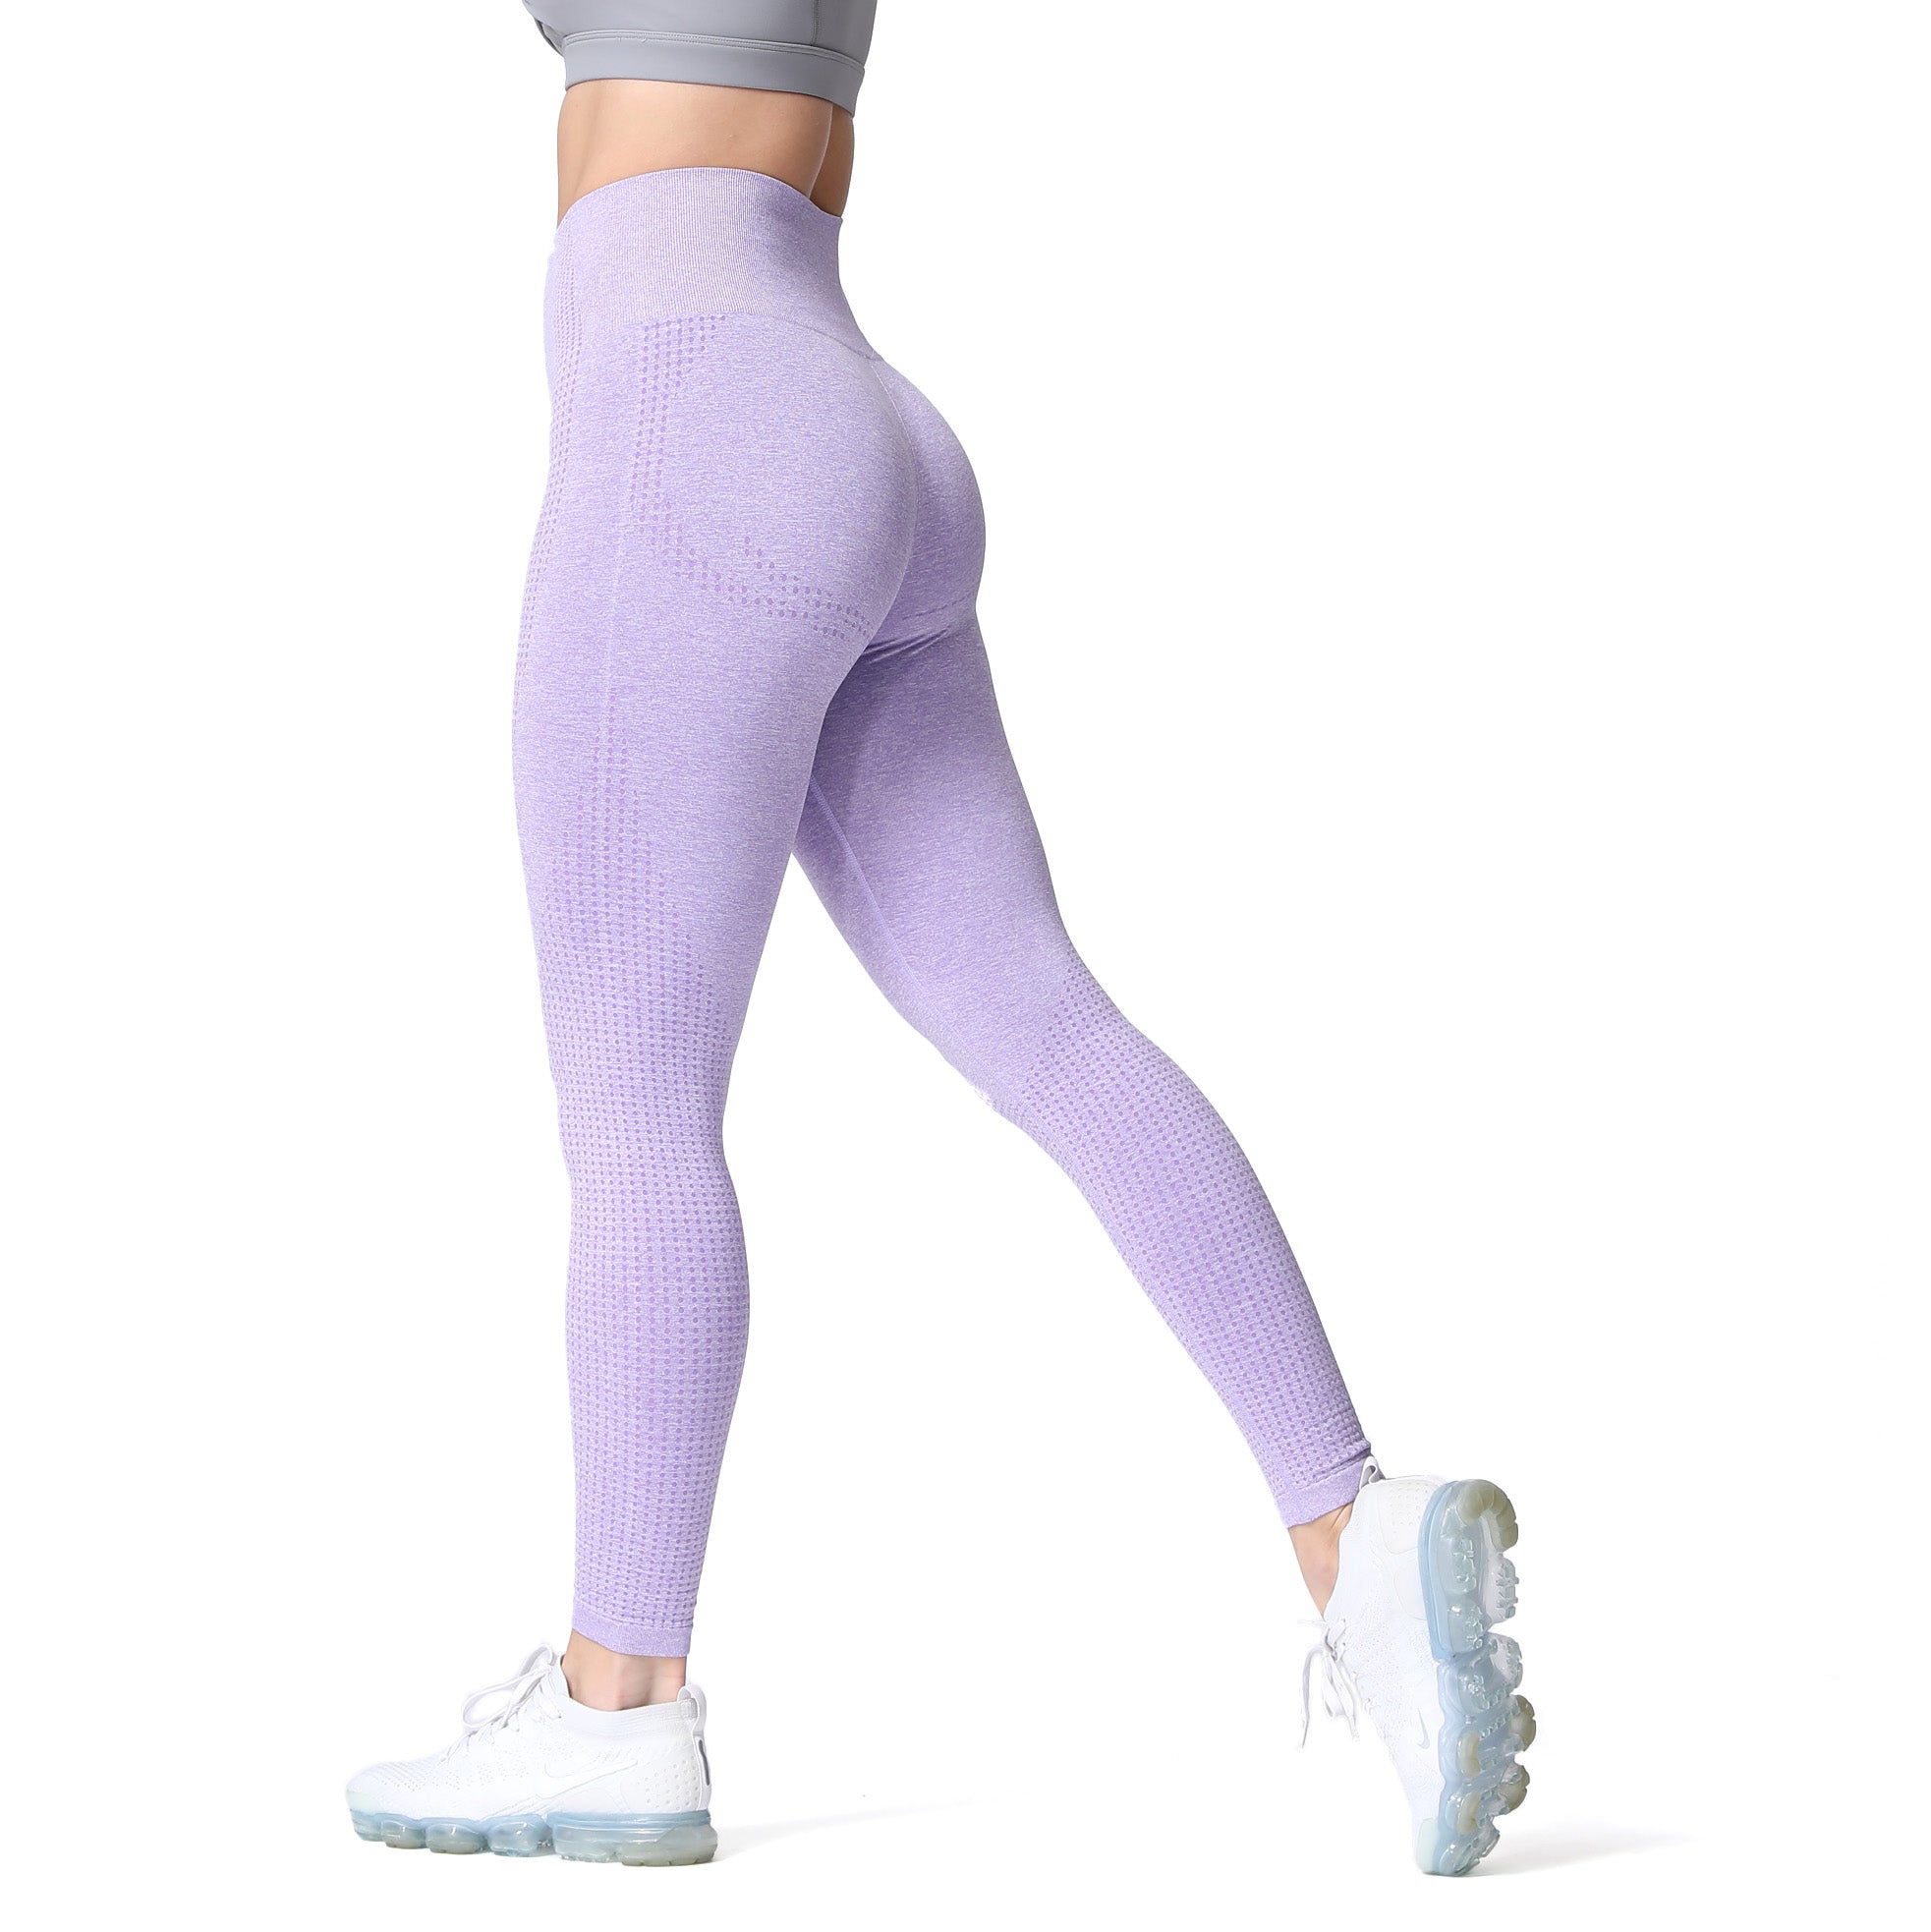  Aoxjox Women's High Waist Workout Gym Vital Seamless Leggings  Yoga Pants (Cherry Brown Marl, X-Small) : Sports & Outdoors